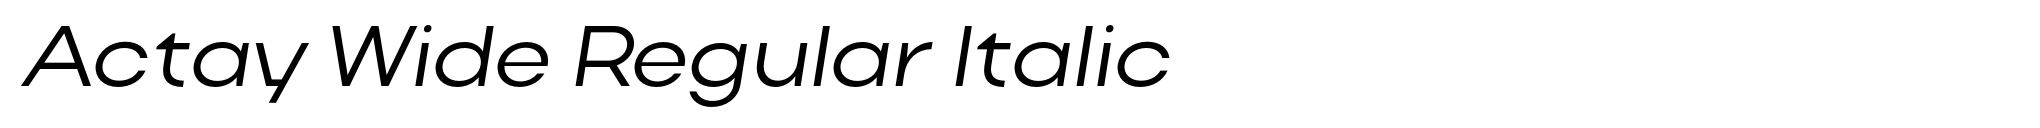 Actay Wide Regular Italic image